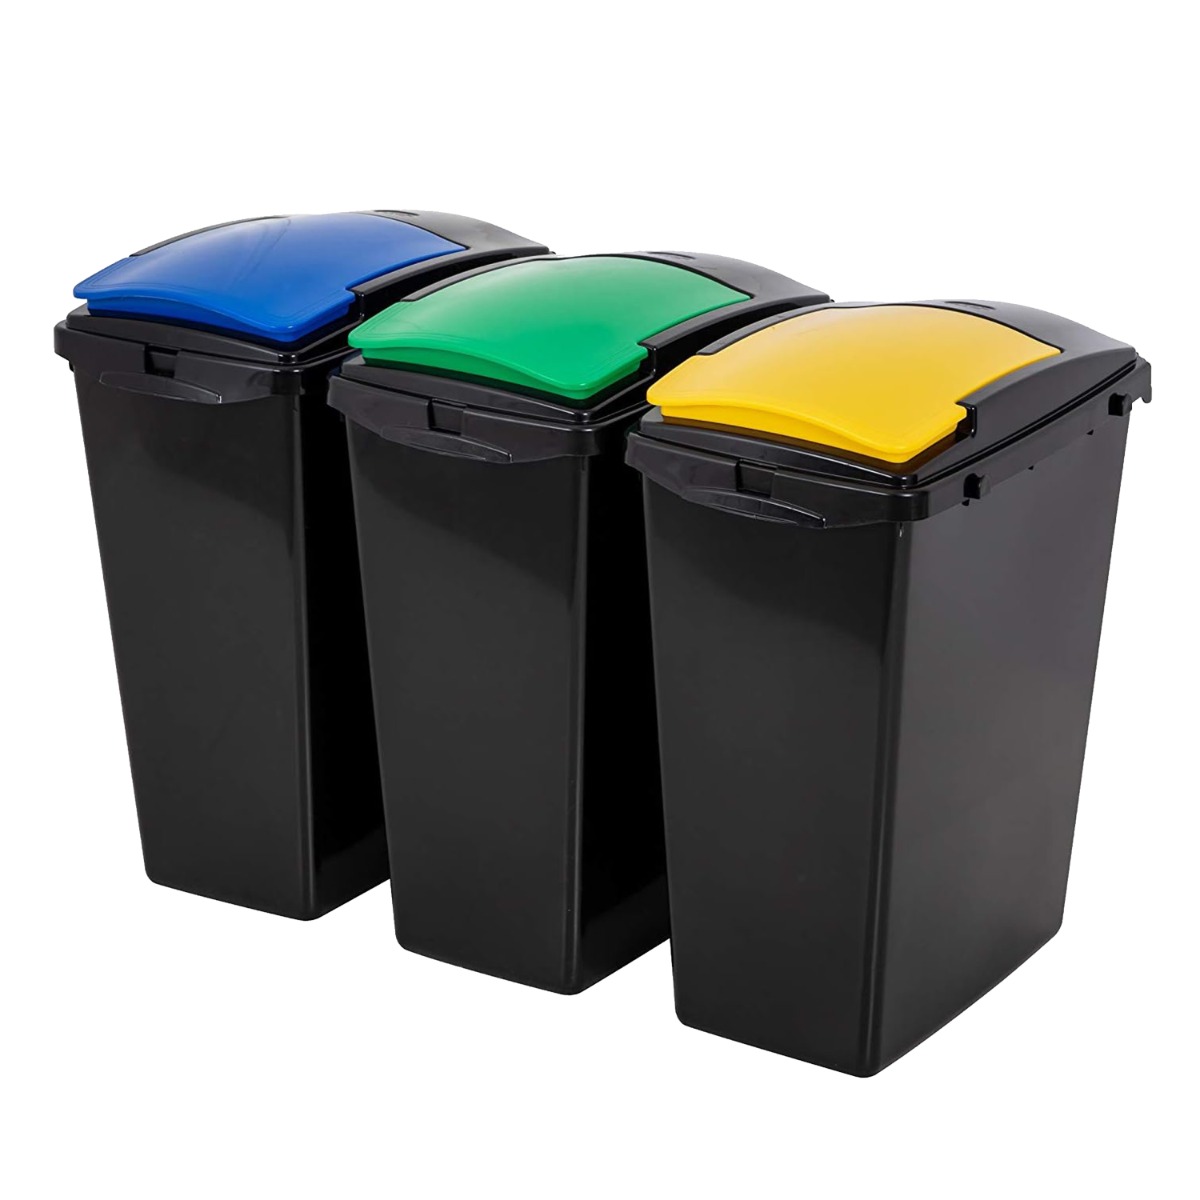 Addis 40L Yellow, Blue & Green Recycling Bins - Set of 3